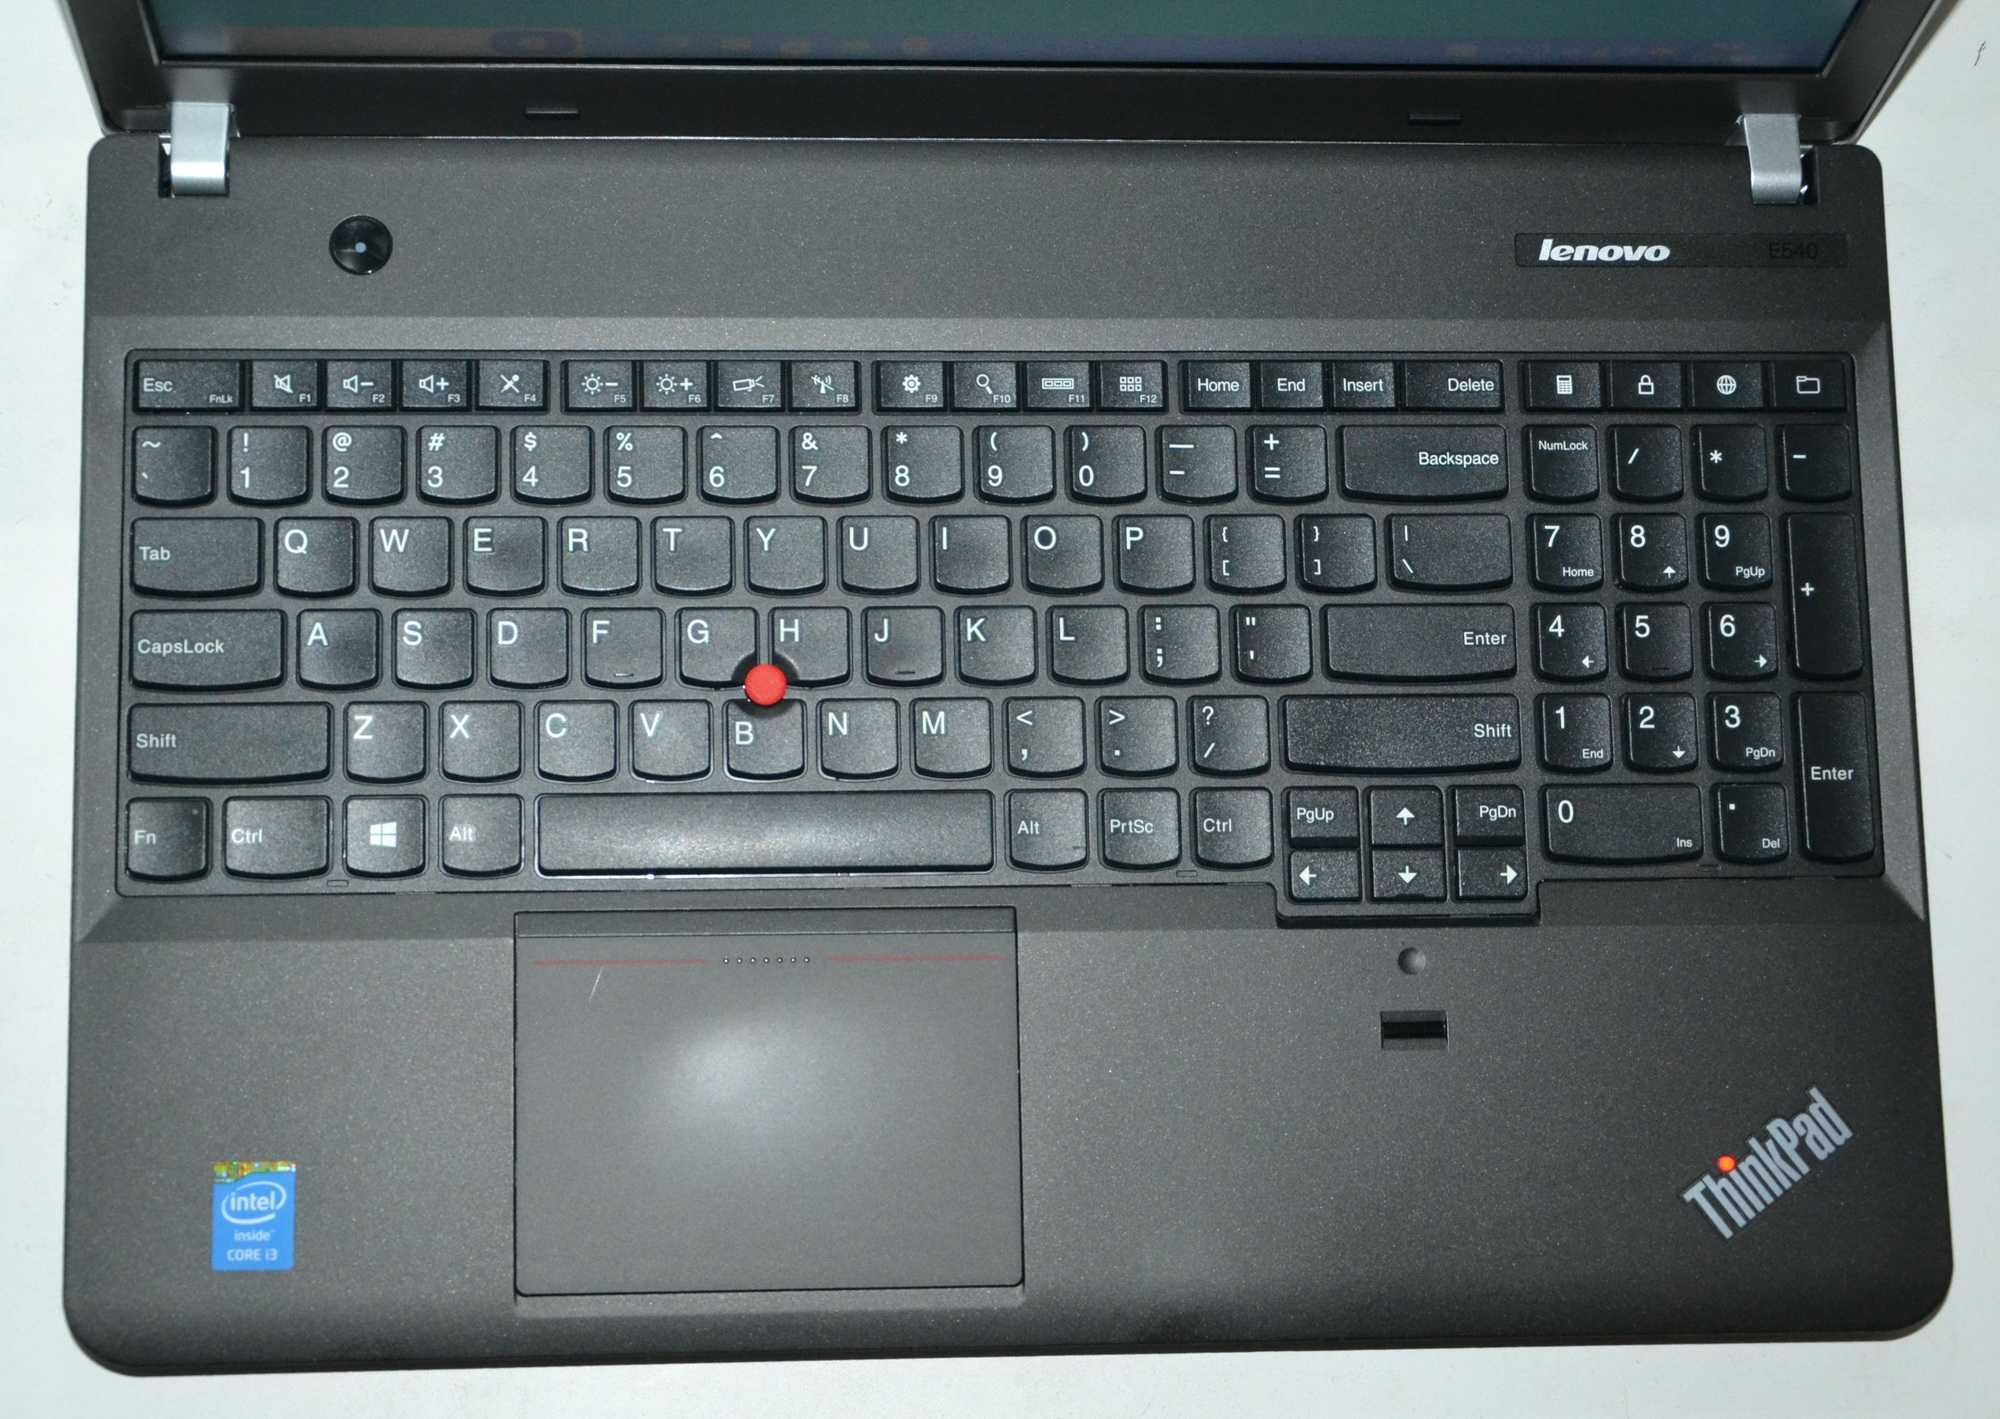 Ноутбук Lenovo ThinkPad E540 i3-4000M 2.4GHz 8Gb/ SSD 128GB 15.6"